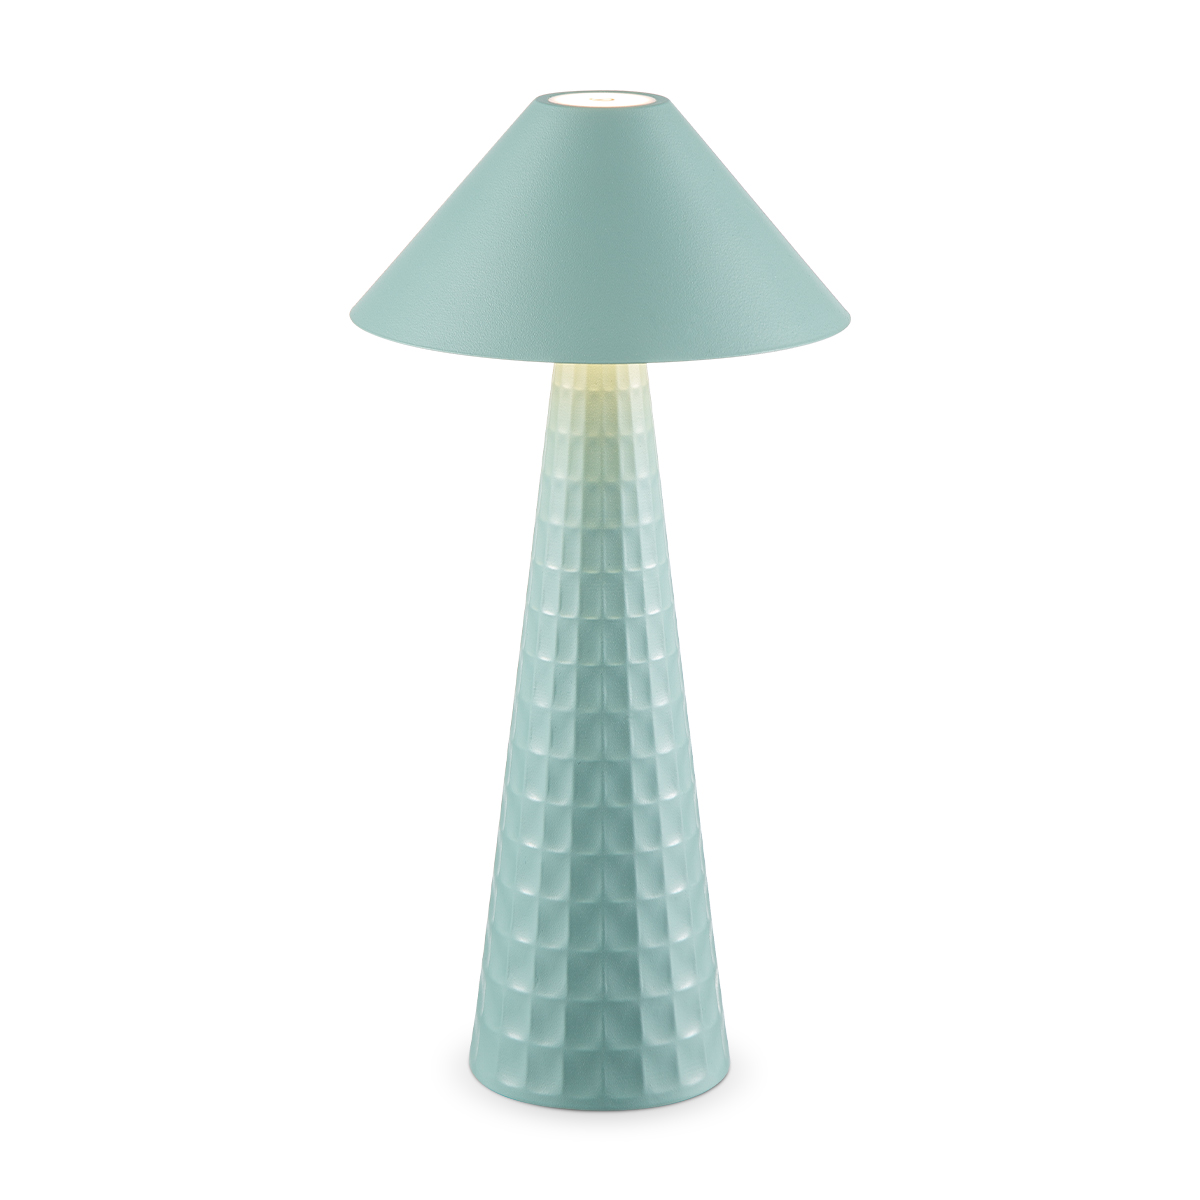 Tangla lighting - TLT7645-01GN - LED table lamp - rechargeable plastic and metal - green - mushroom